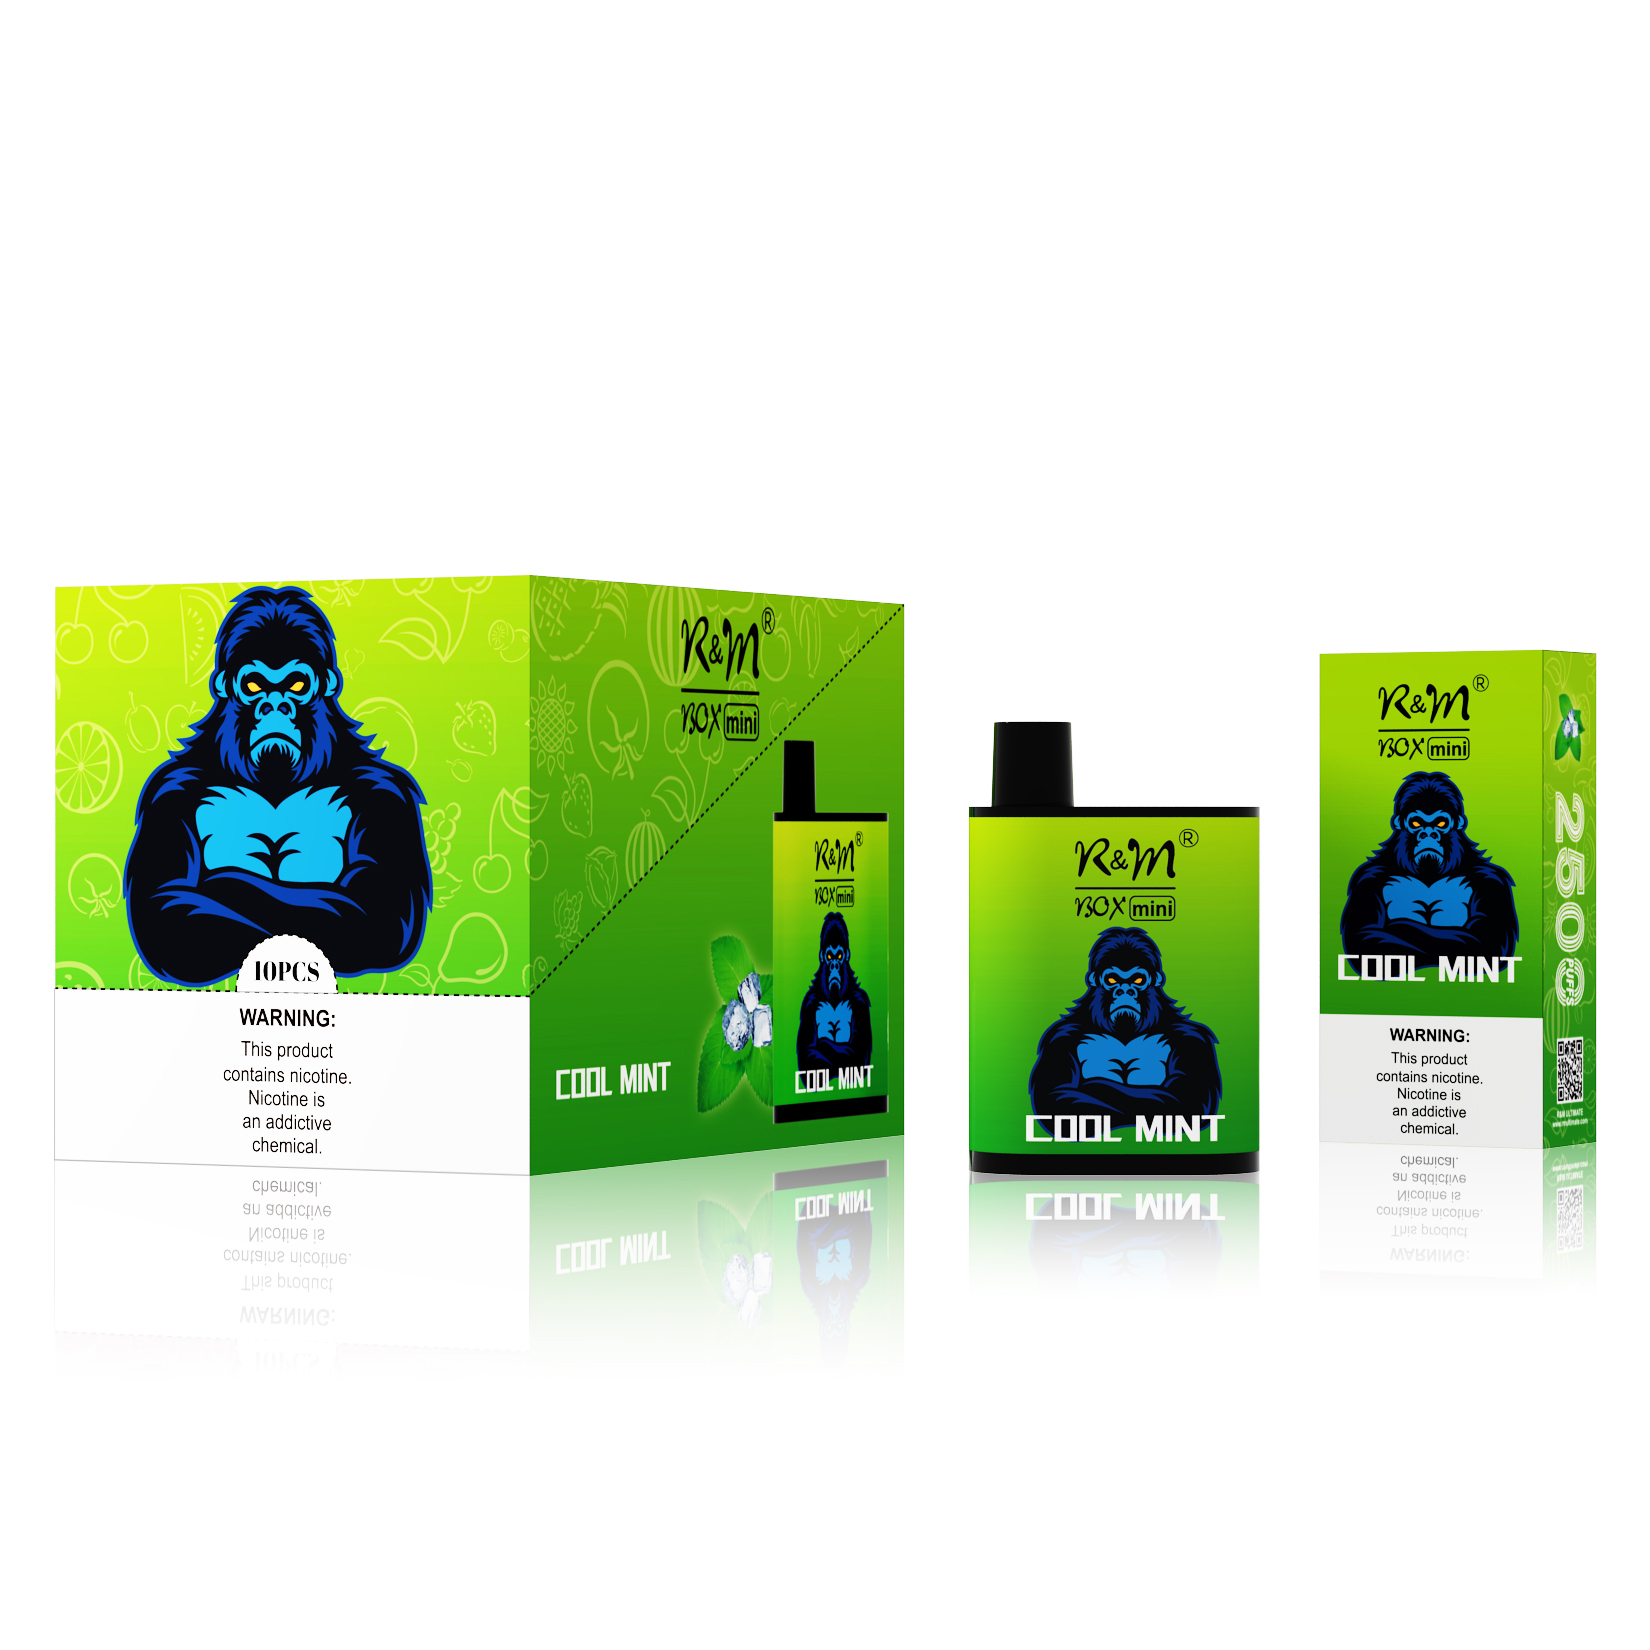 R&M BOX MINI Magic Oil​|5% Salt Nicotine Germany Vape Wholesaler|Manufacturer